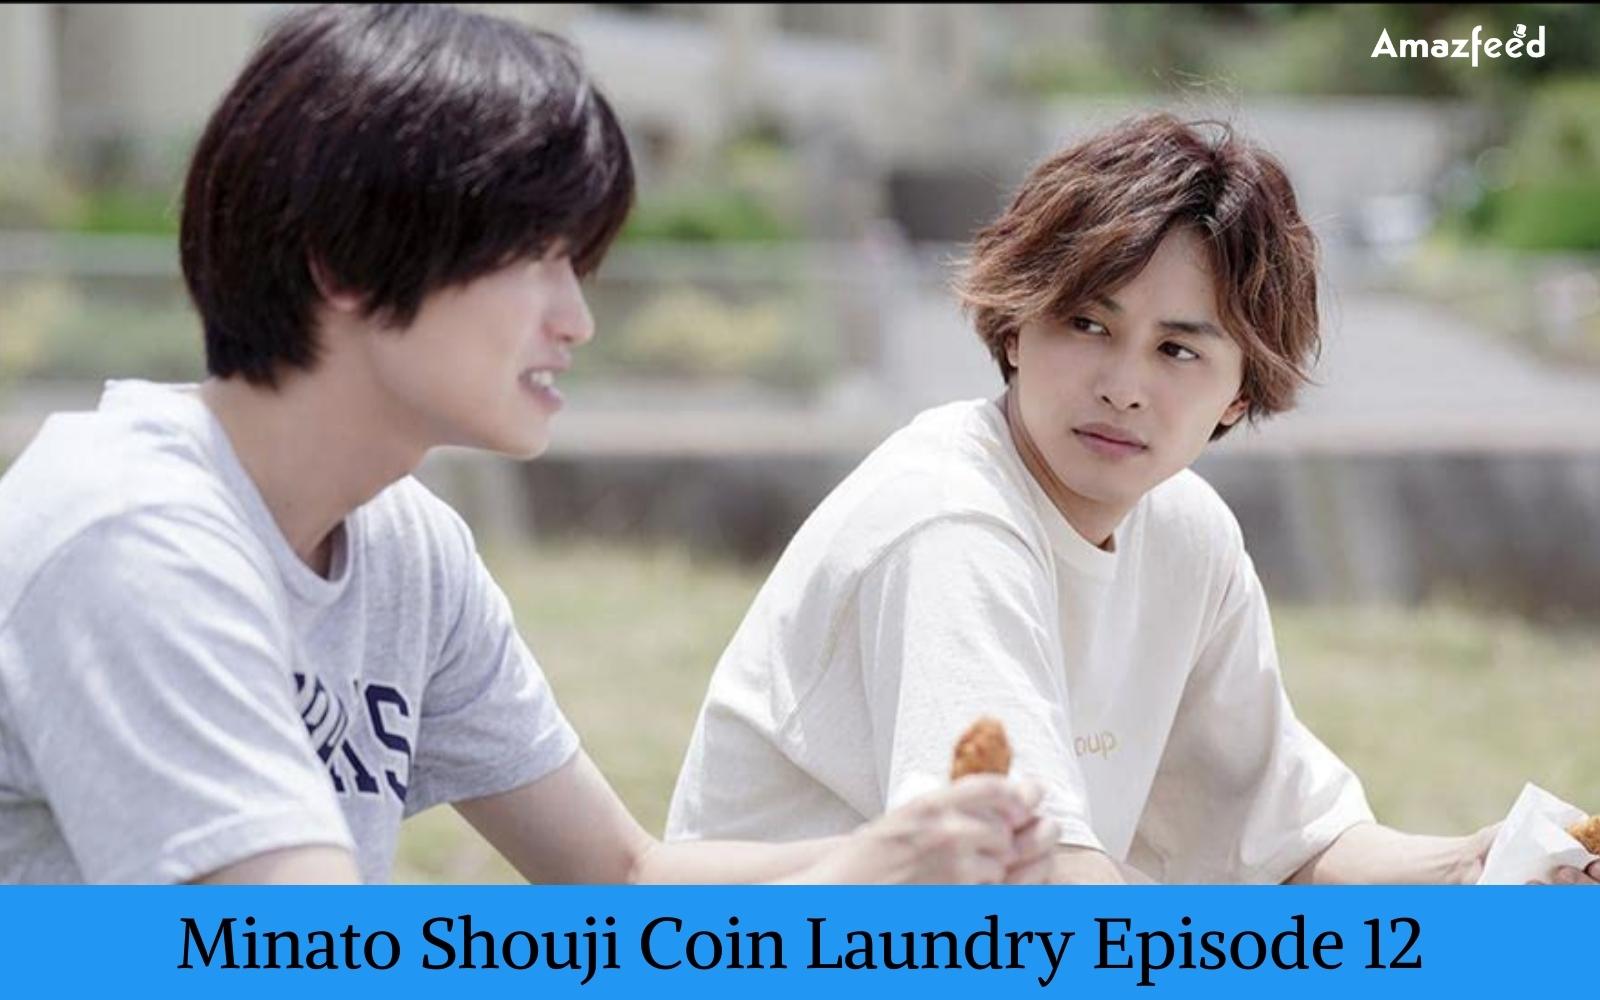 Minato Shouji Coin Laundry Episode 12 ⇒ Countdown, Release Date, Spoilers, Recap, Cast & News Updates